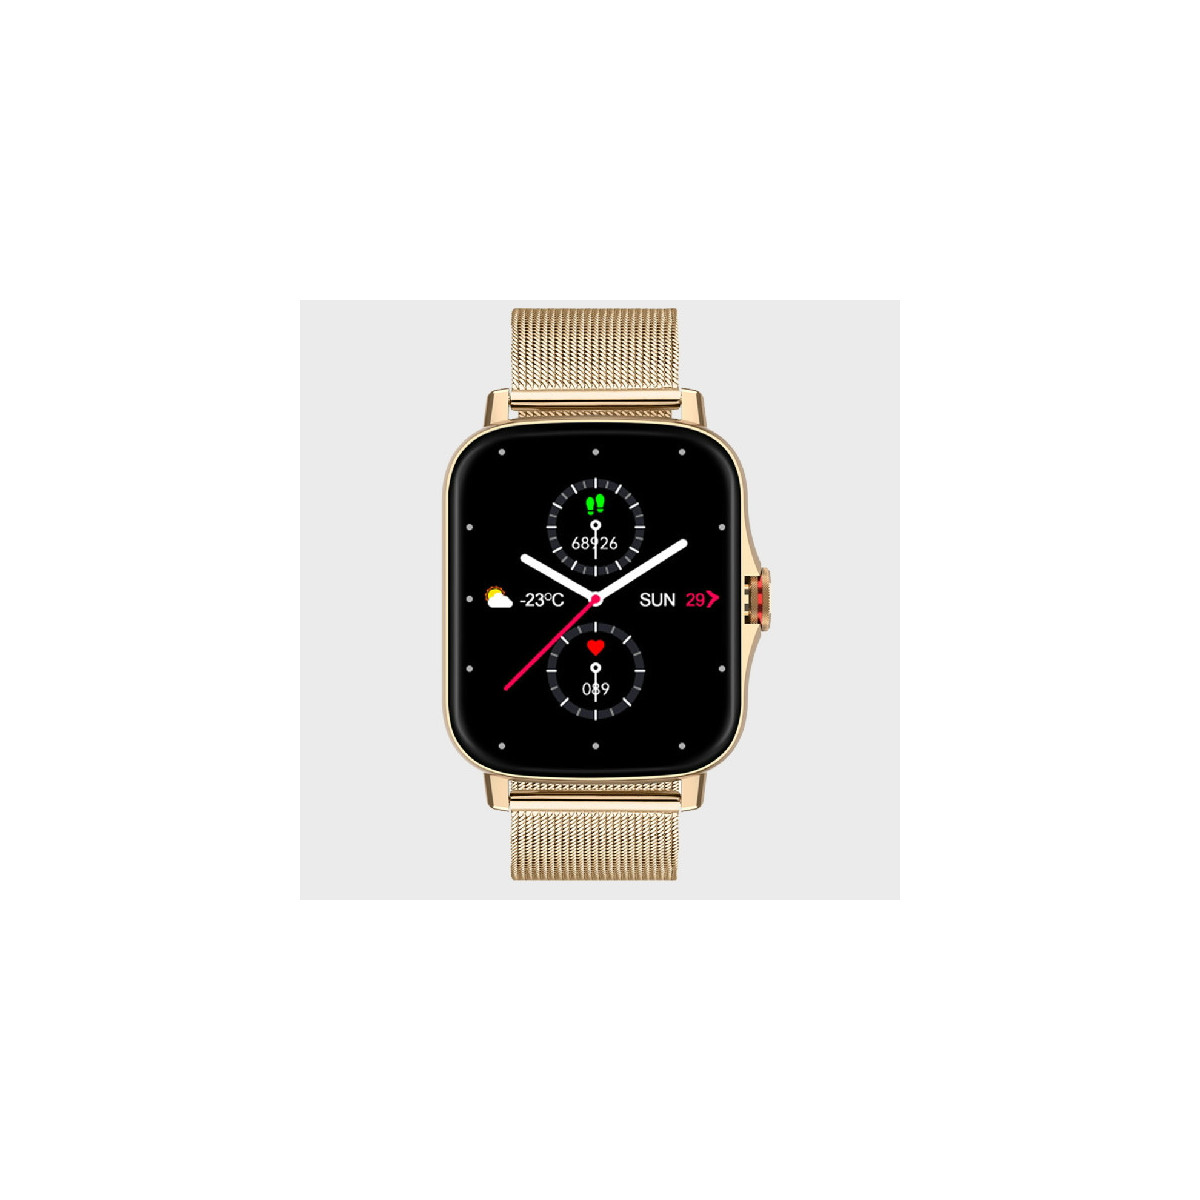 Reloj Radiant Smartwatch Las Vegas unisex V2